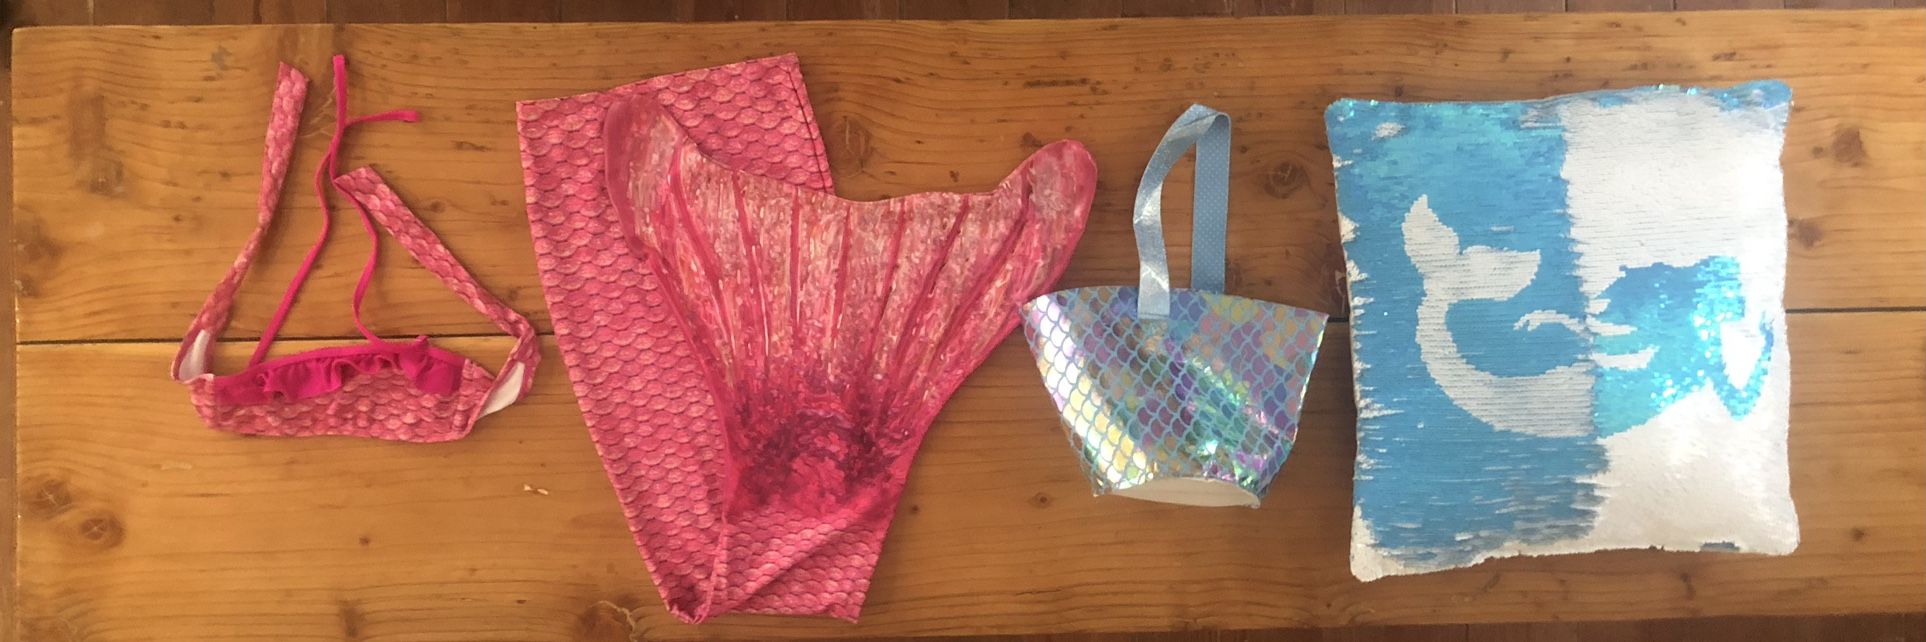 Mermaid Tail With Bikini Top, Pillow And Basket